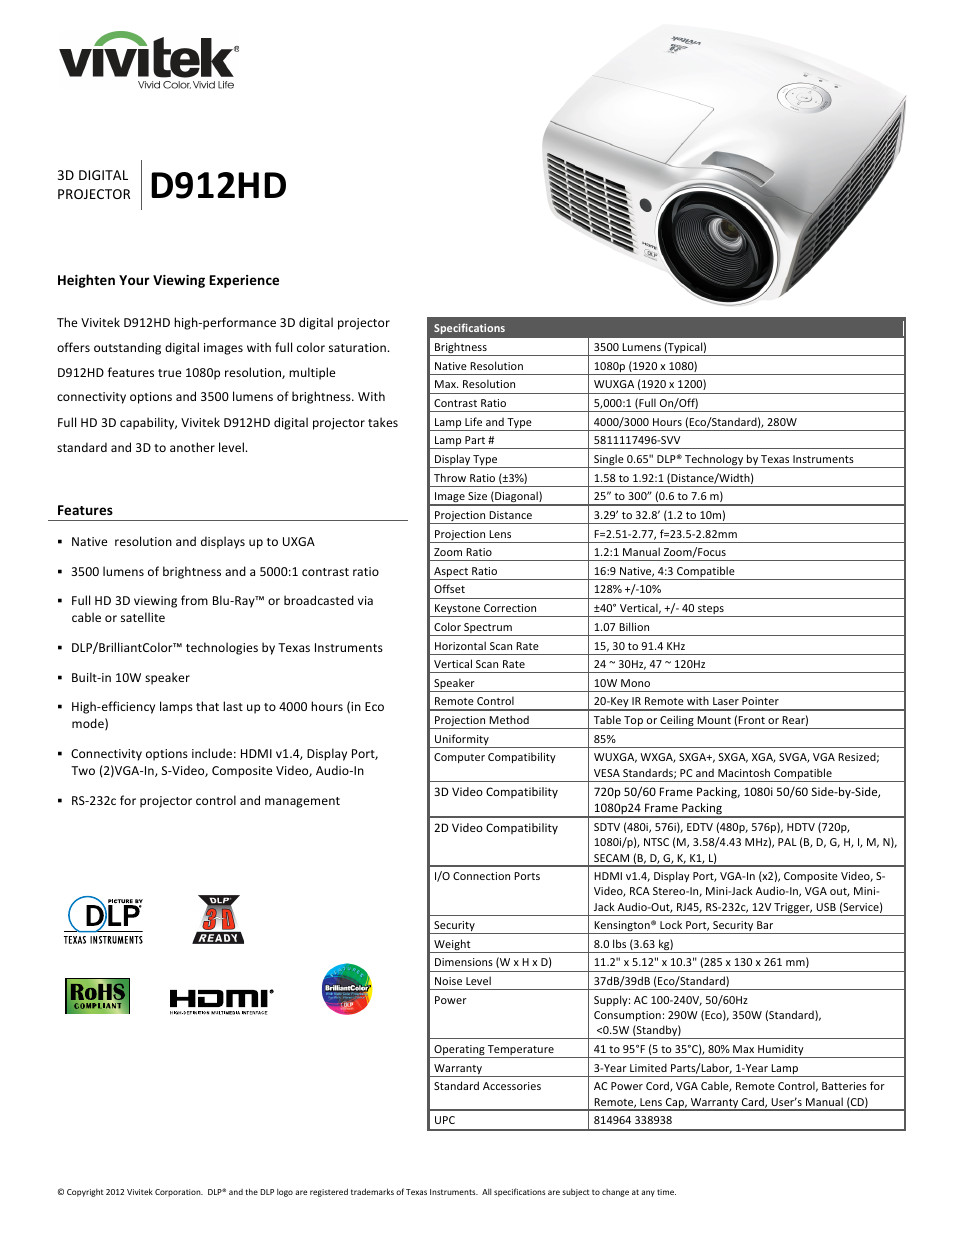 D912HD VIVITEK - 1080P 3D DIGITAL PROJECTOR (3500 LUMENS)